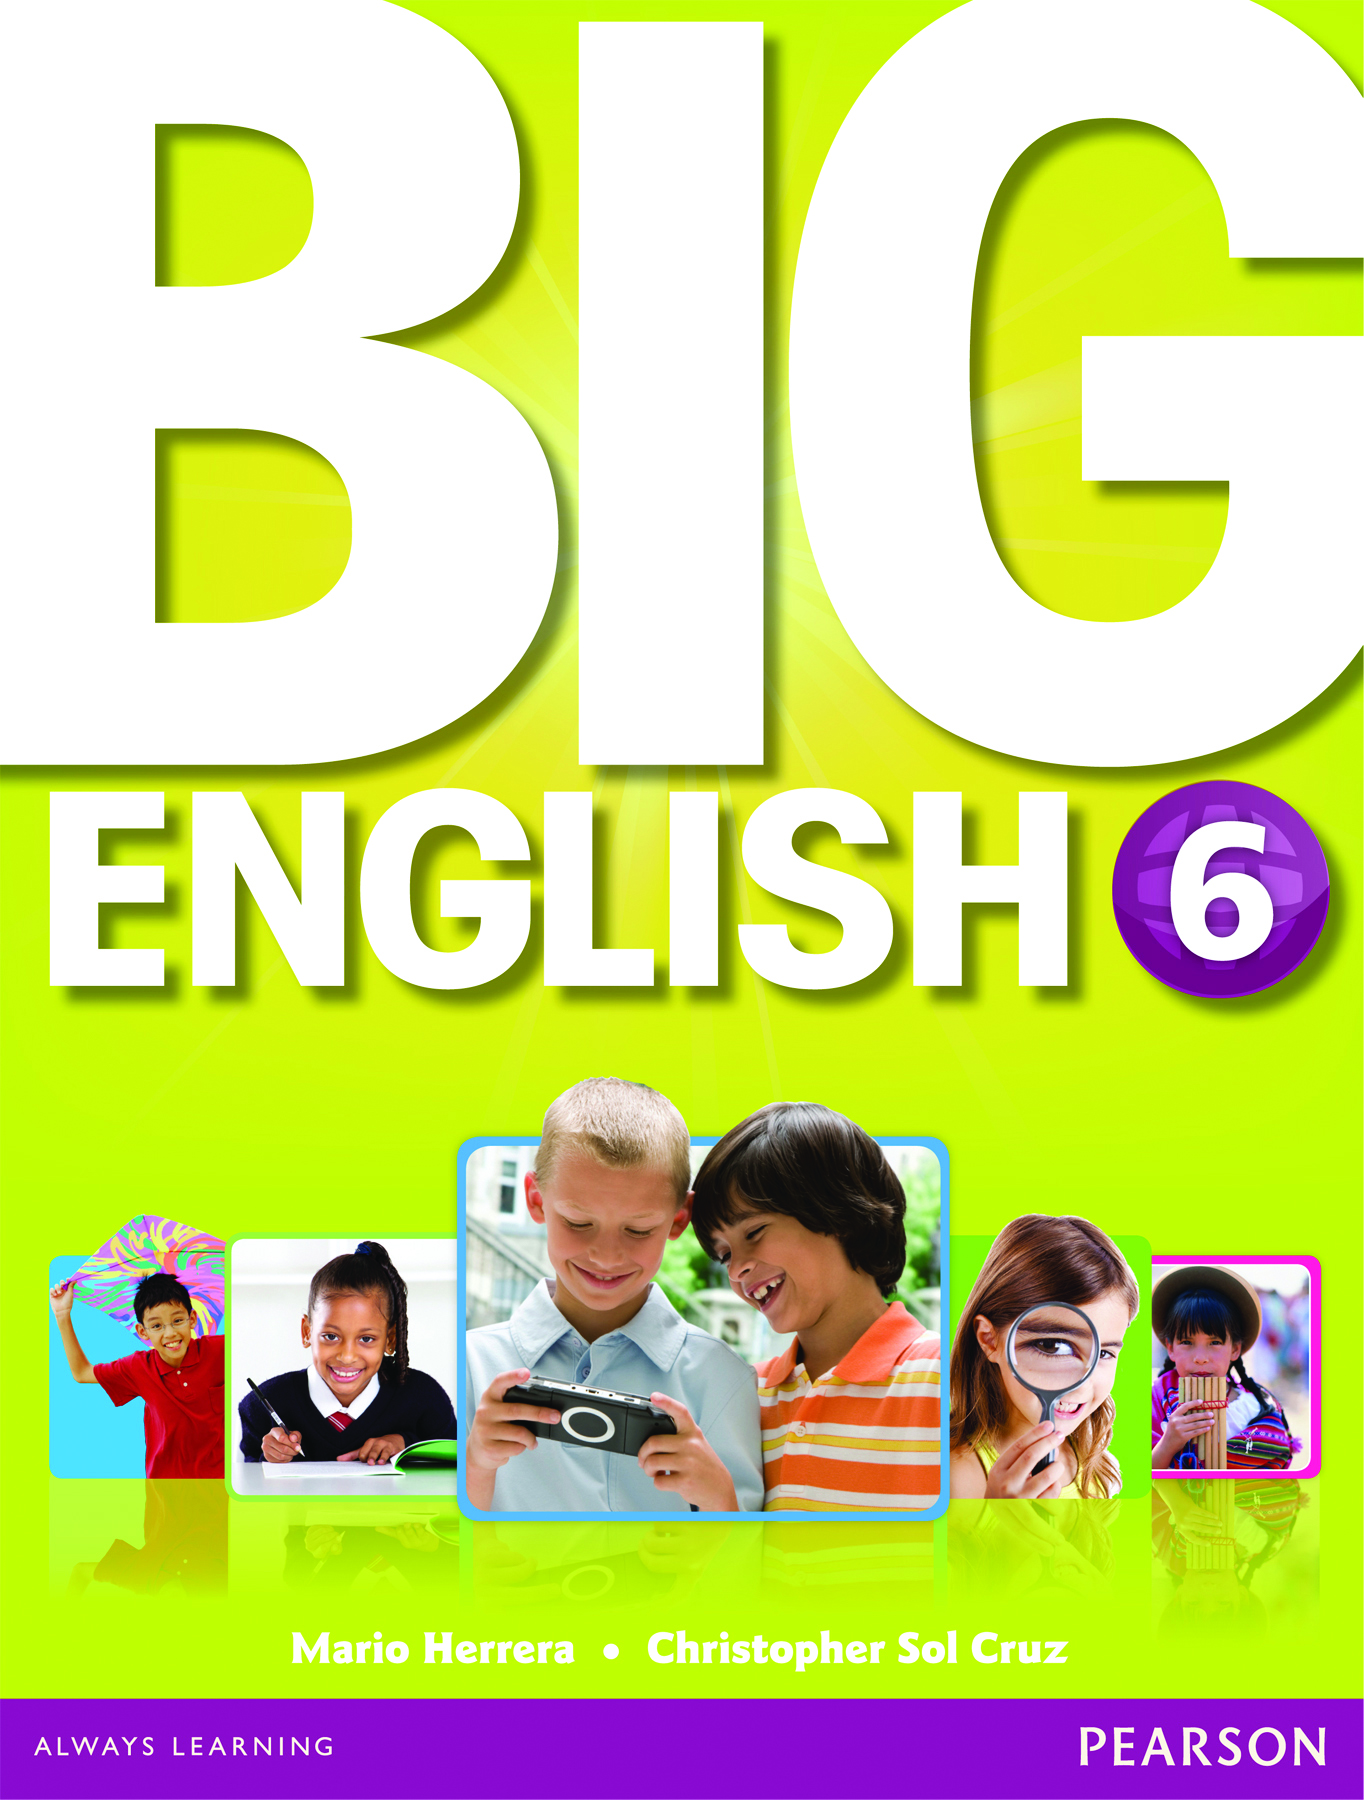 BIG ENGLISH 6 Student Book